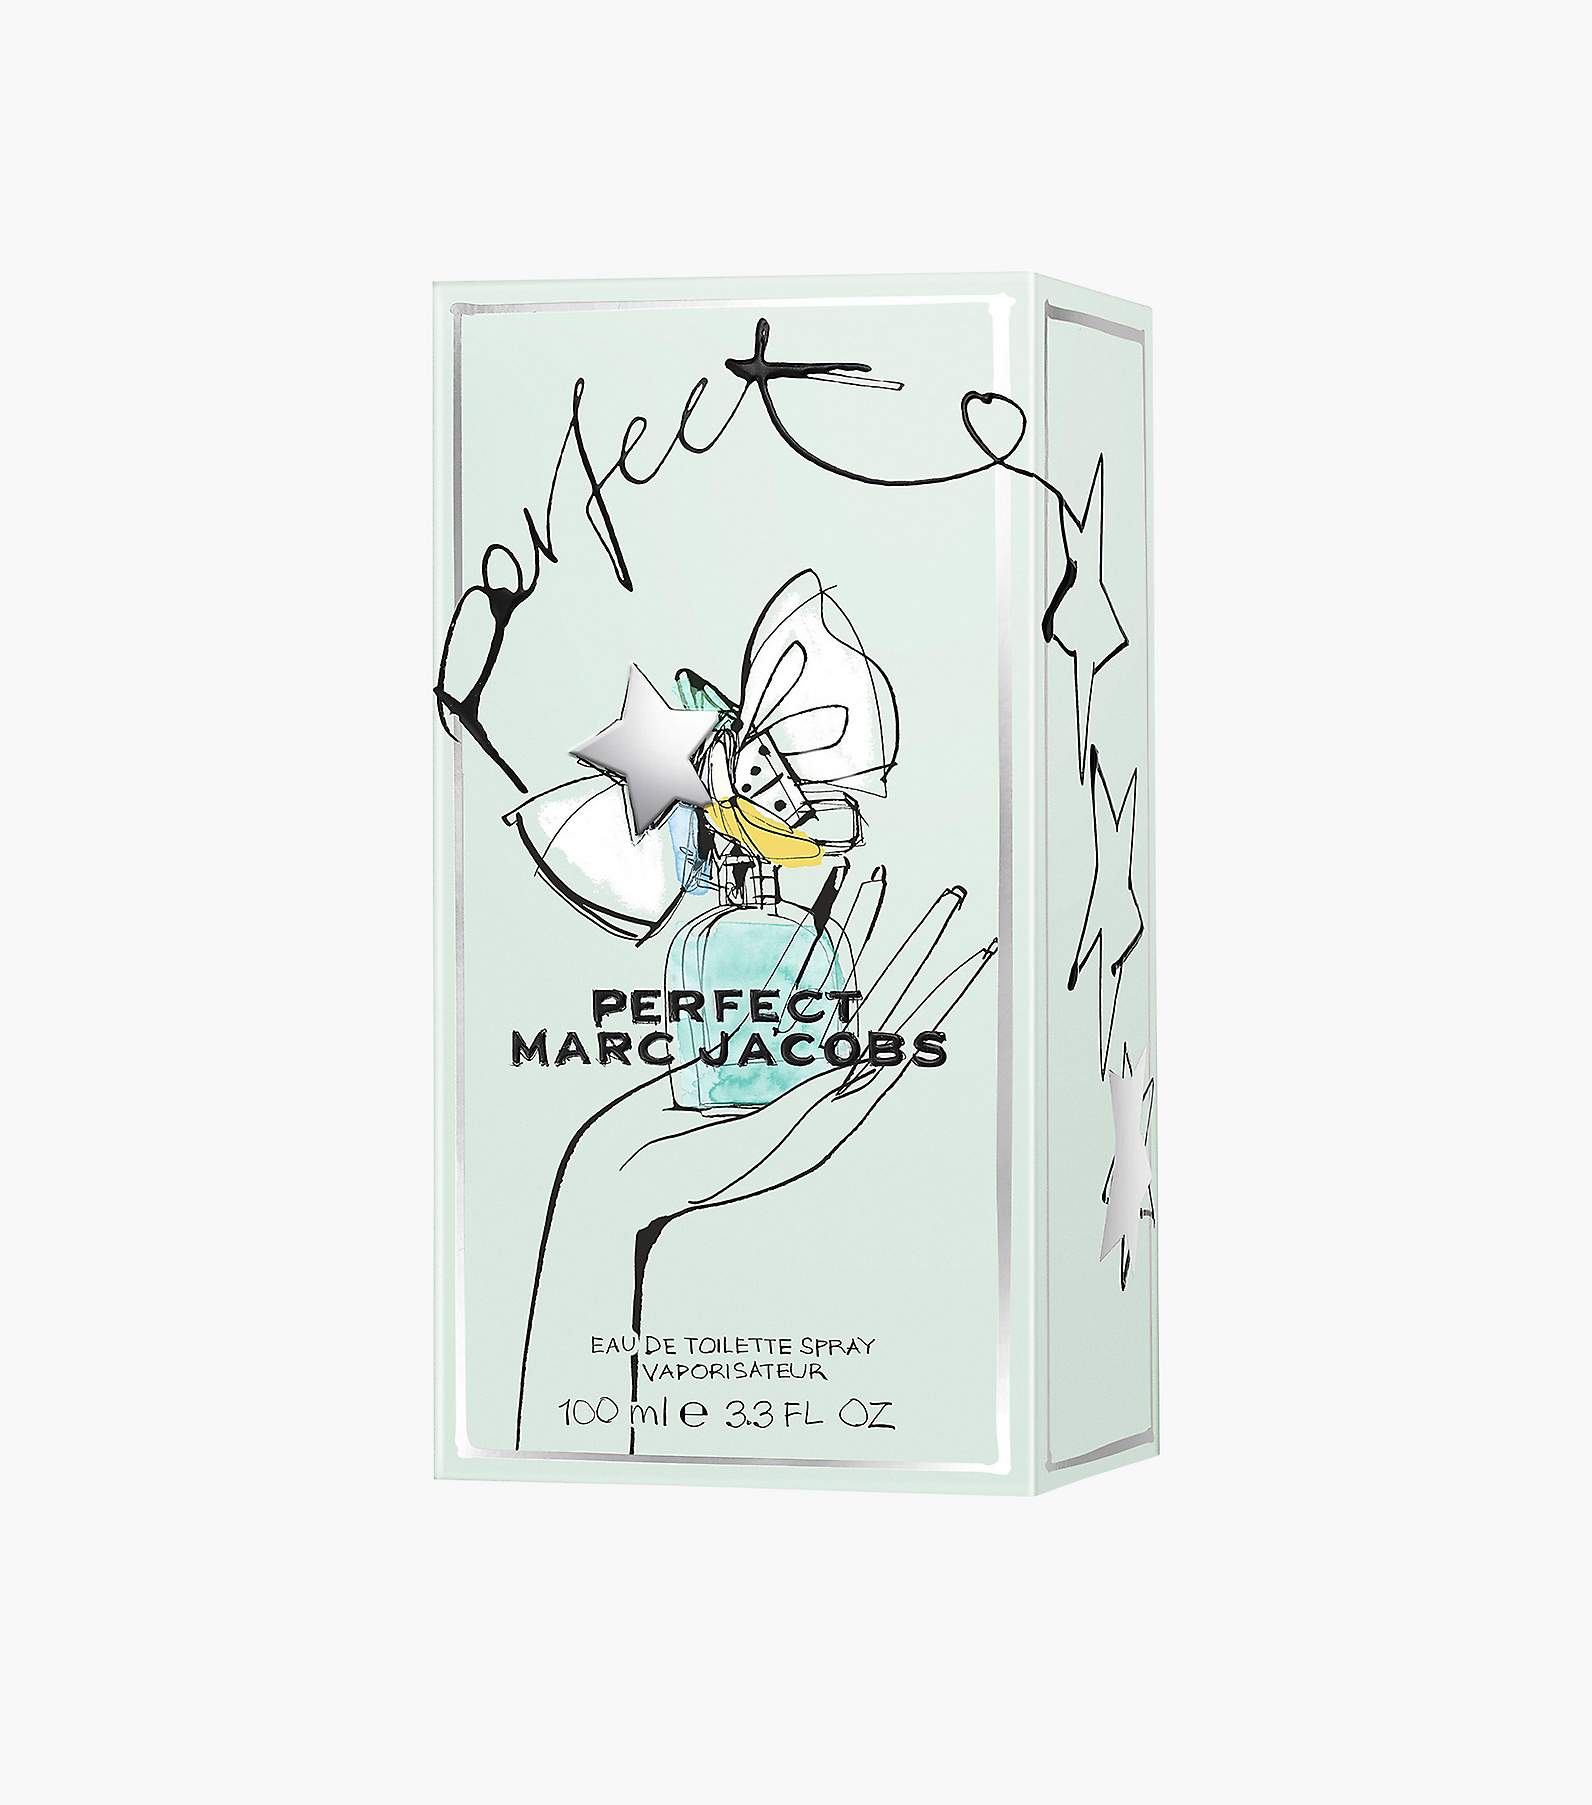 Introducing PERFECT MARC JACOBS Eau de Toilette. A fresh and